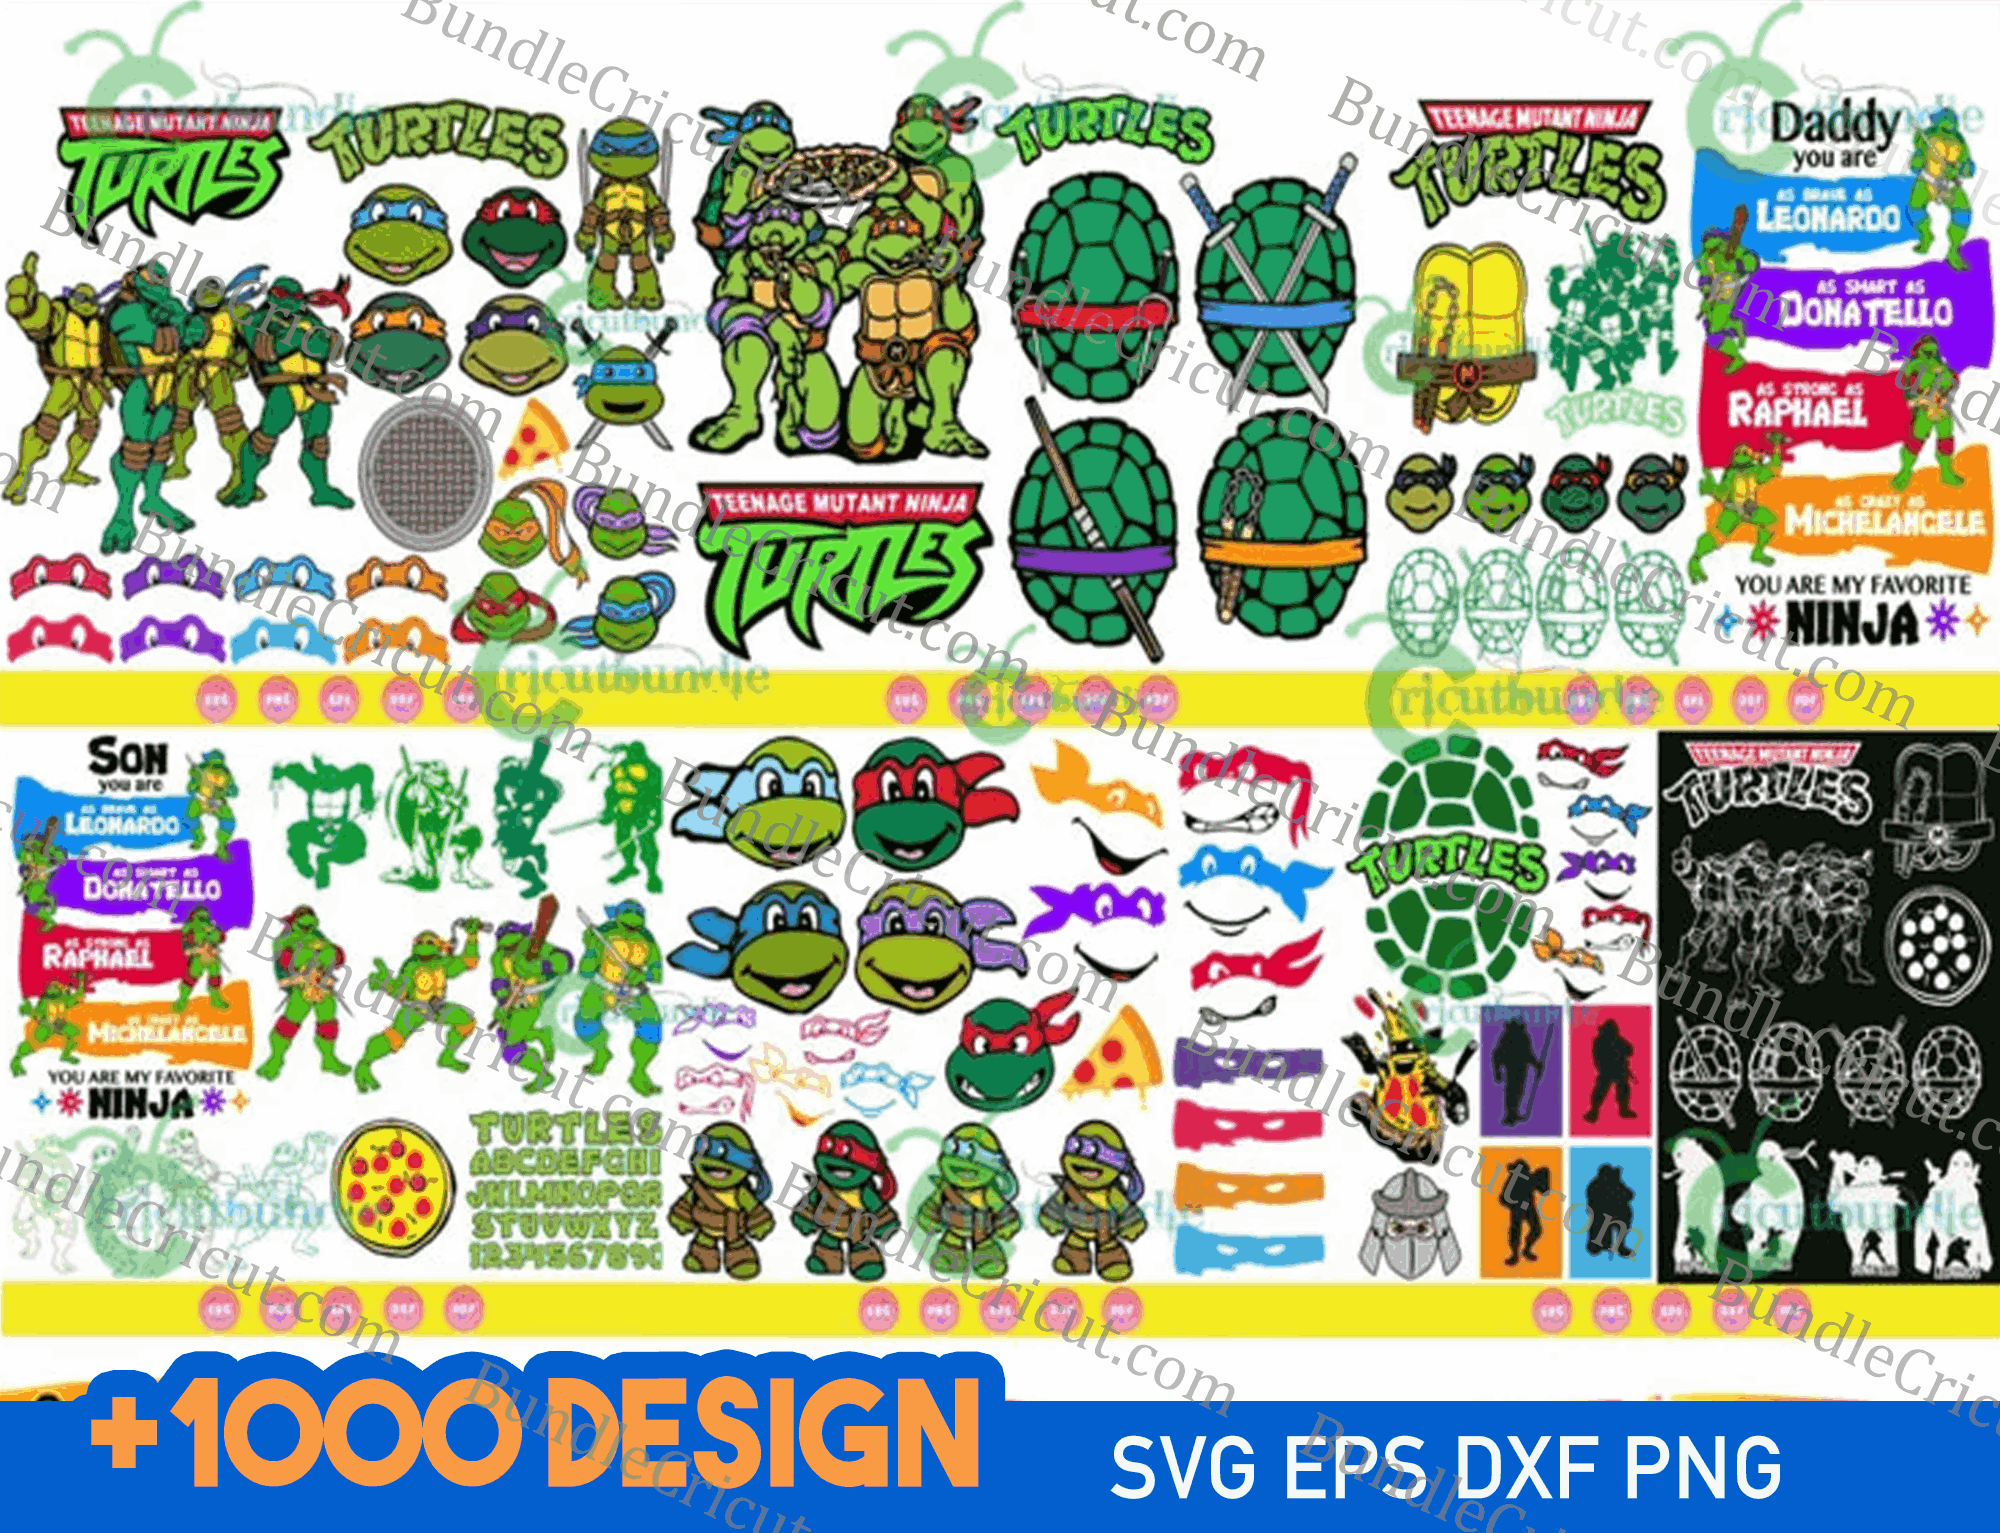 Printable Ninja Turtles Custom Shirt Template Instant Download